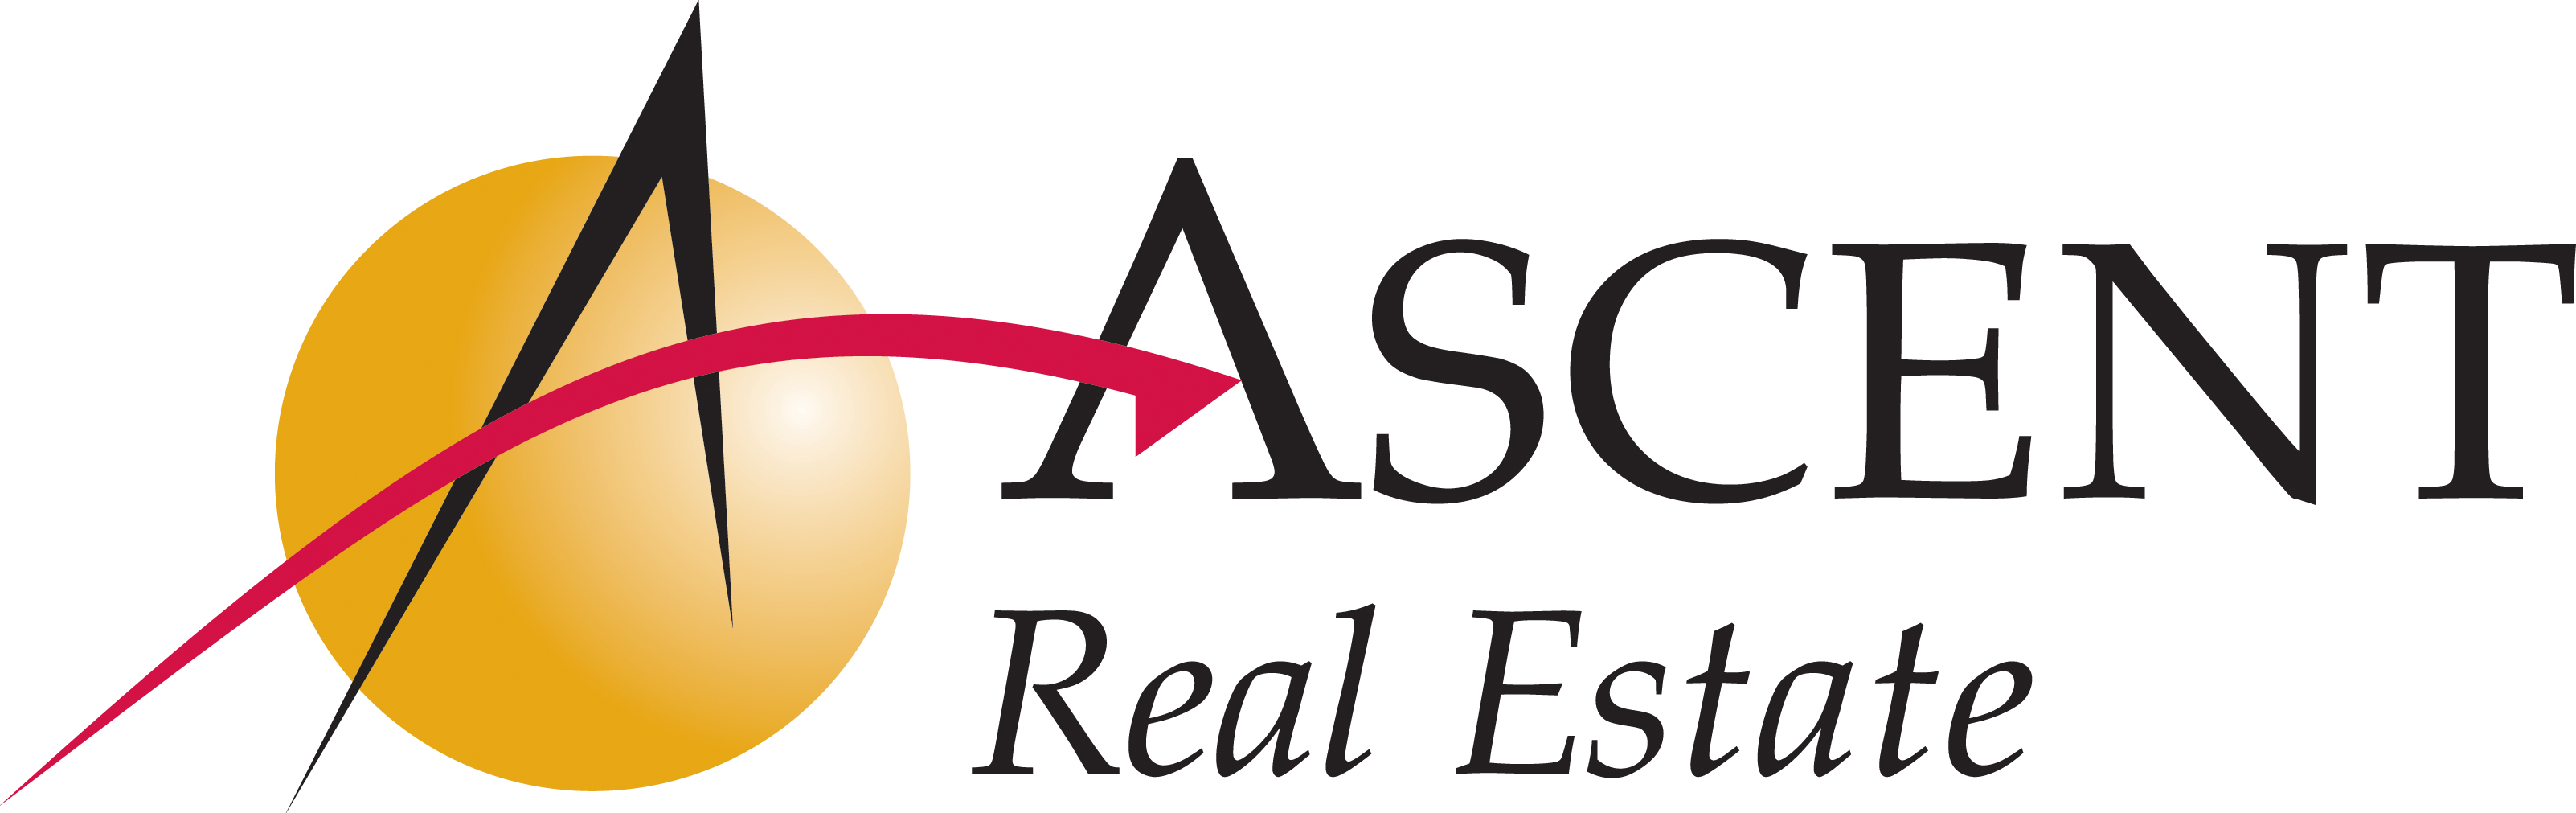 Ascent Logo Png - Ascent Real Estate (3205x1011)